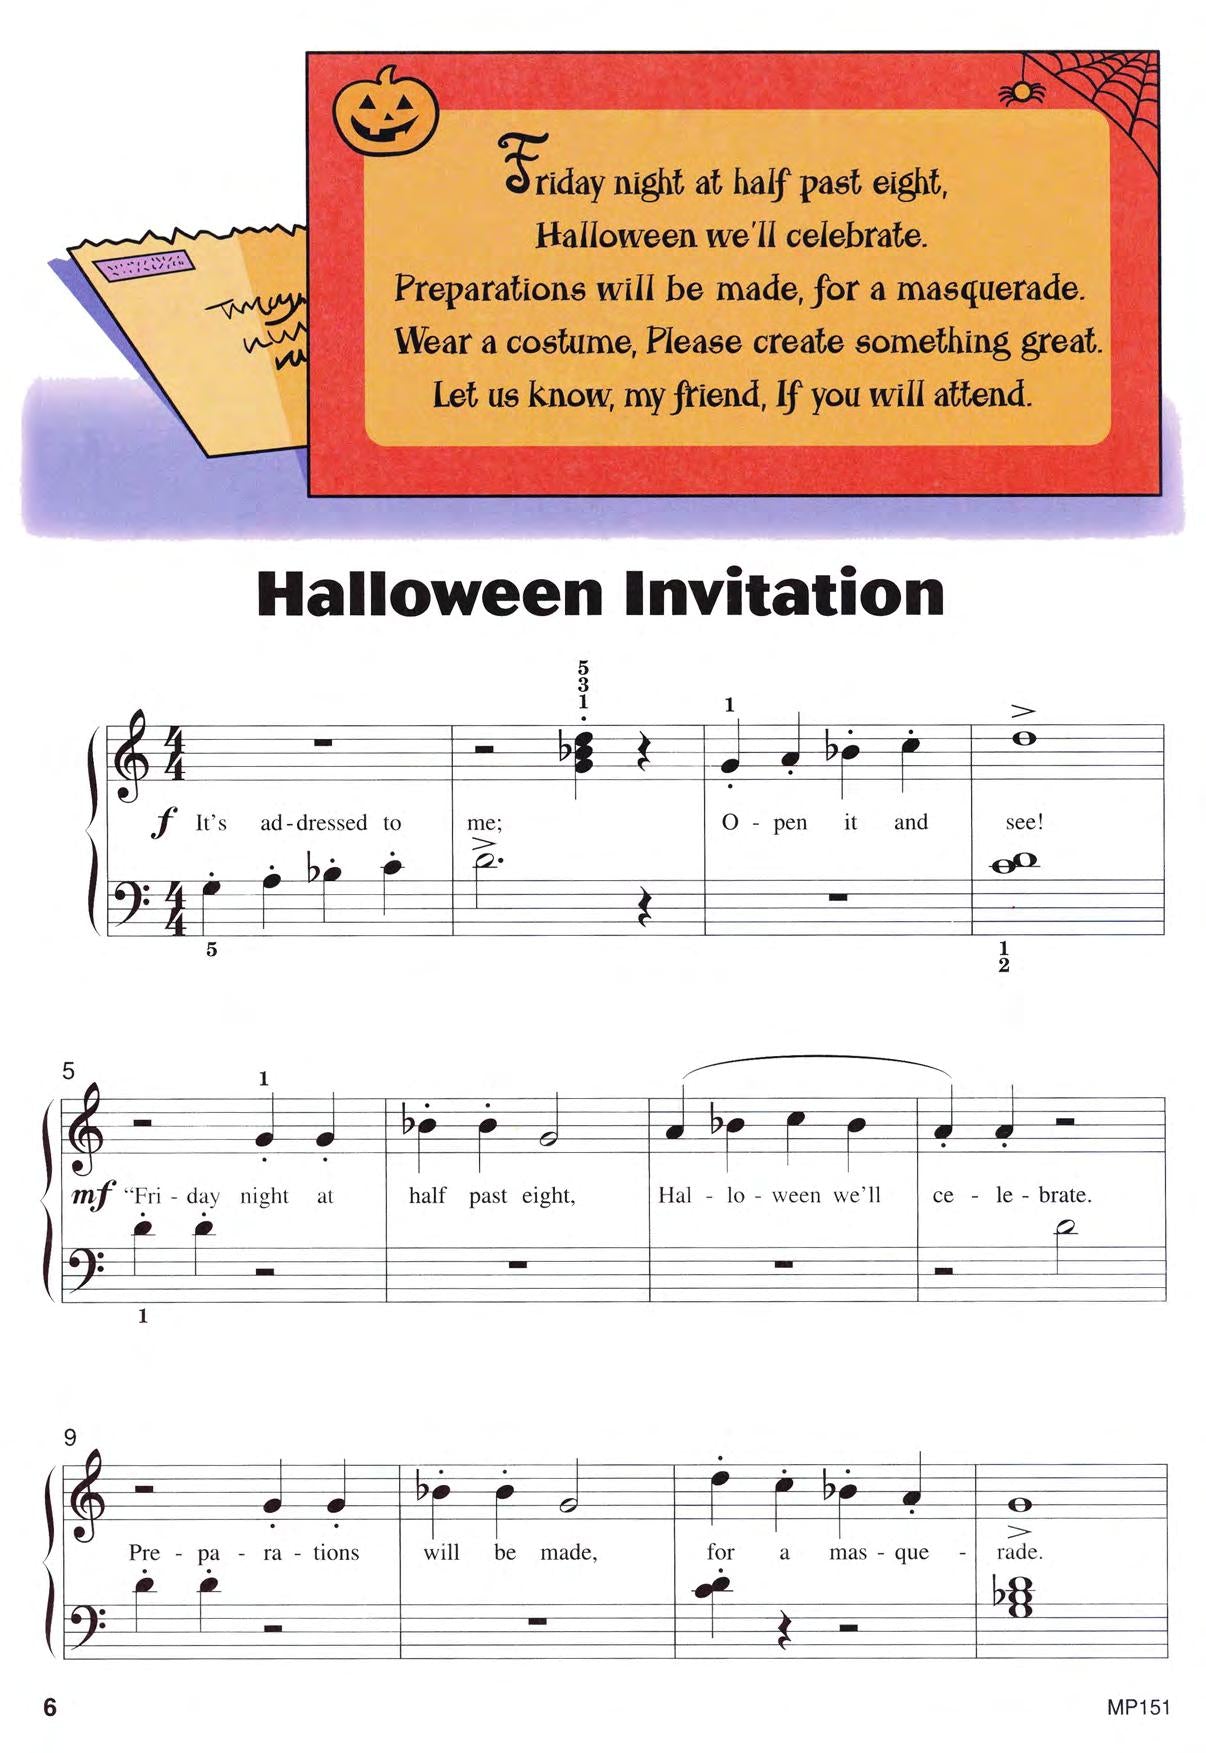 Piano Town Halloween, Level 1